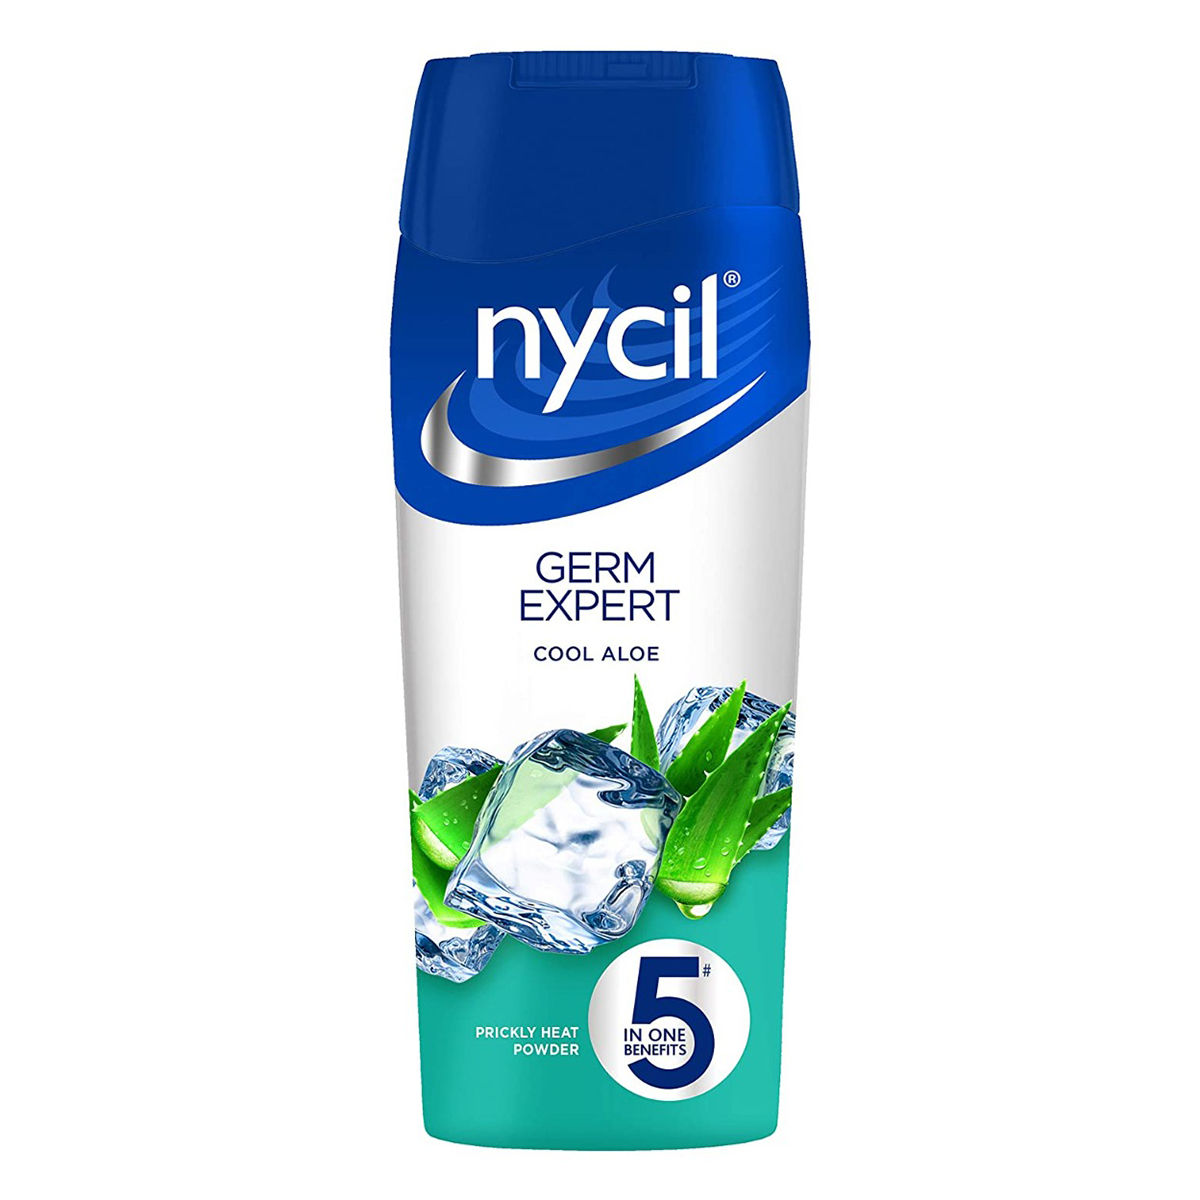 Buy Nycil Germ Expert Cool Aloe Prickly Heat Powder, 150 gm Online